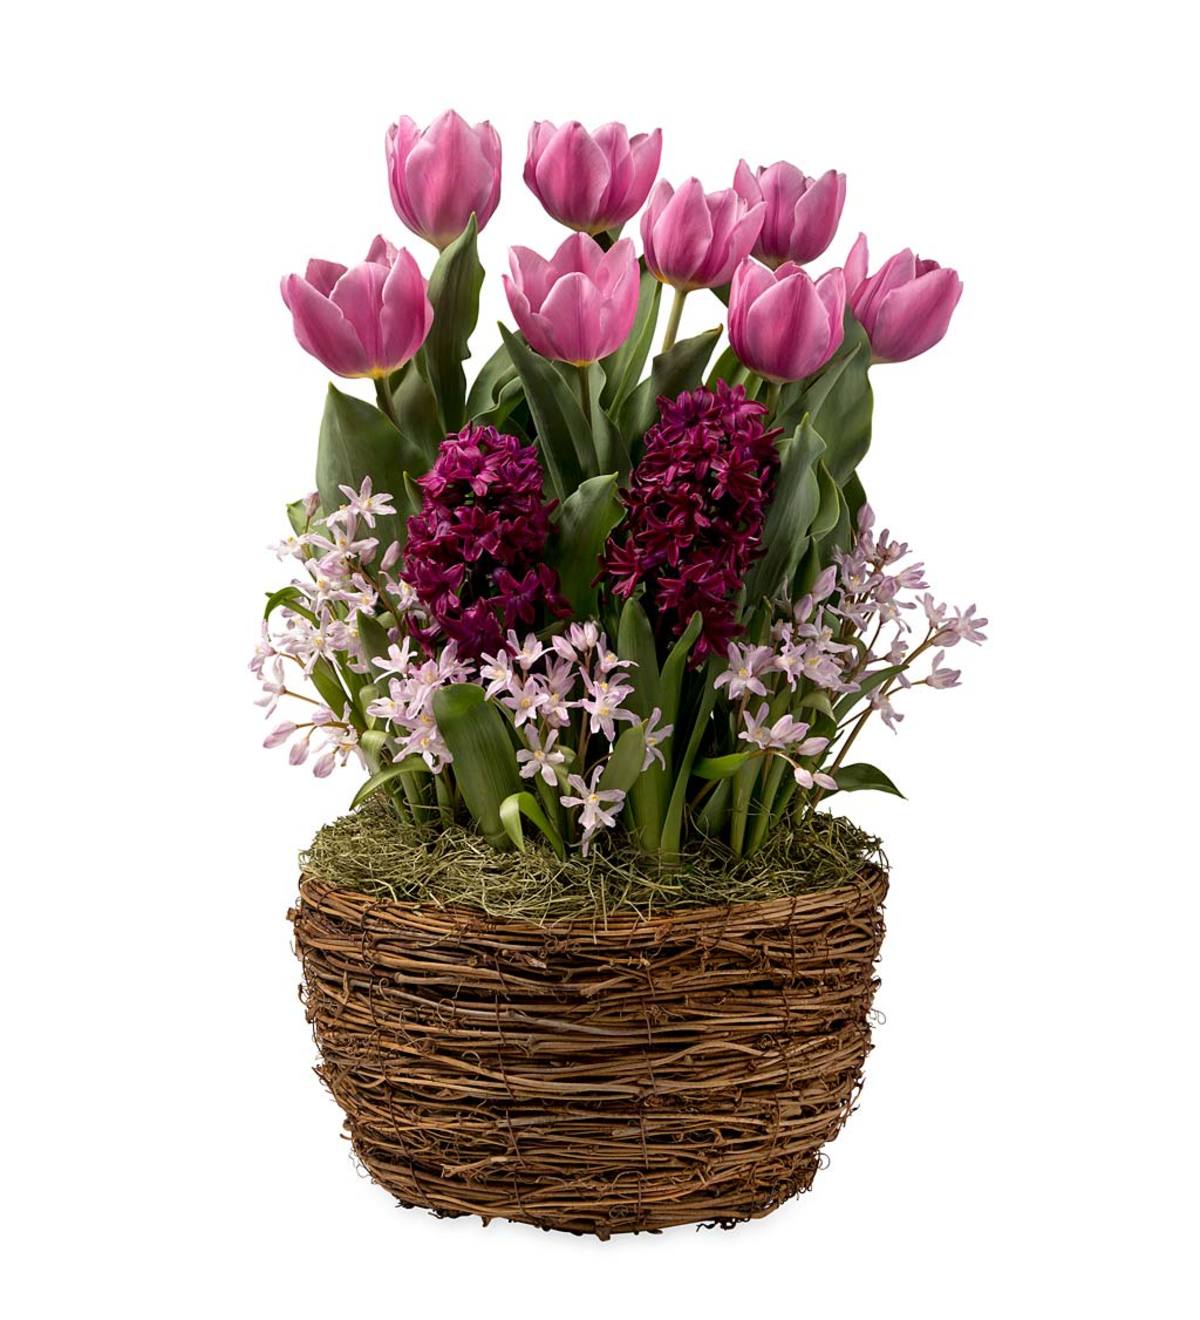 Fuchsia Tulips and Hyacinths Flower Bulb Gift Garden